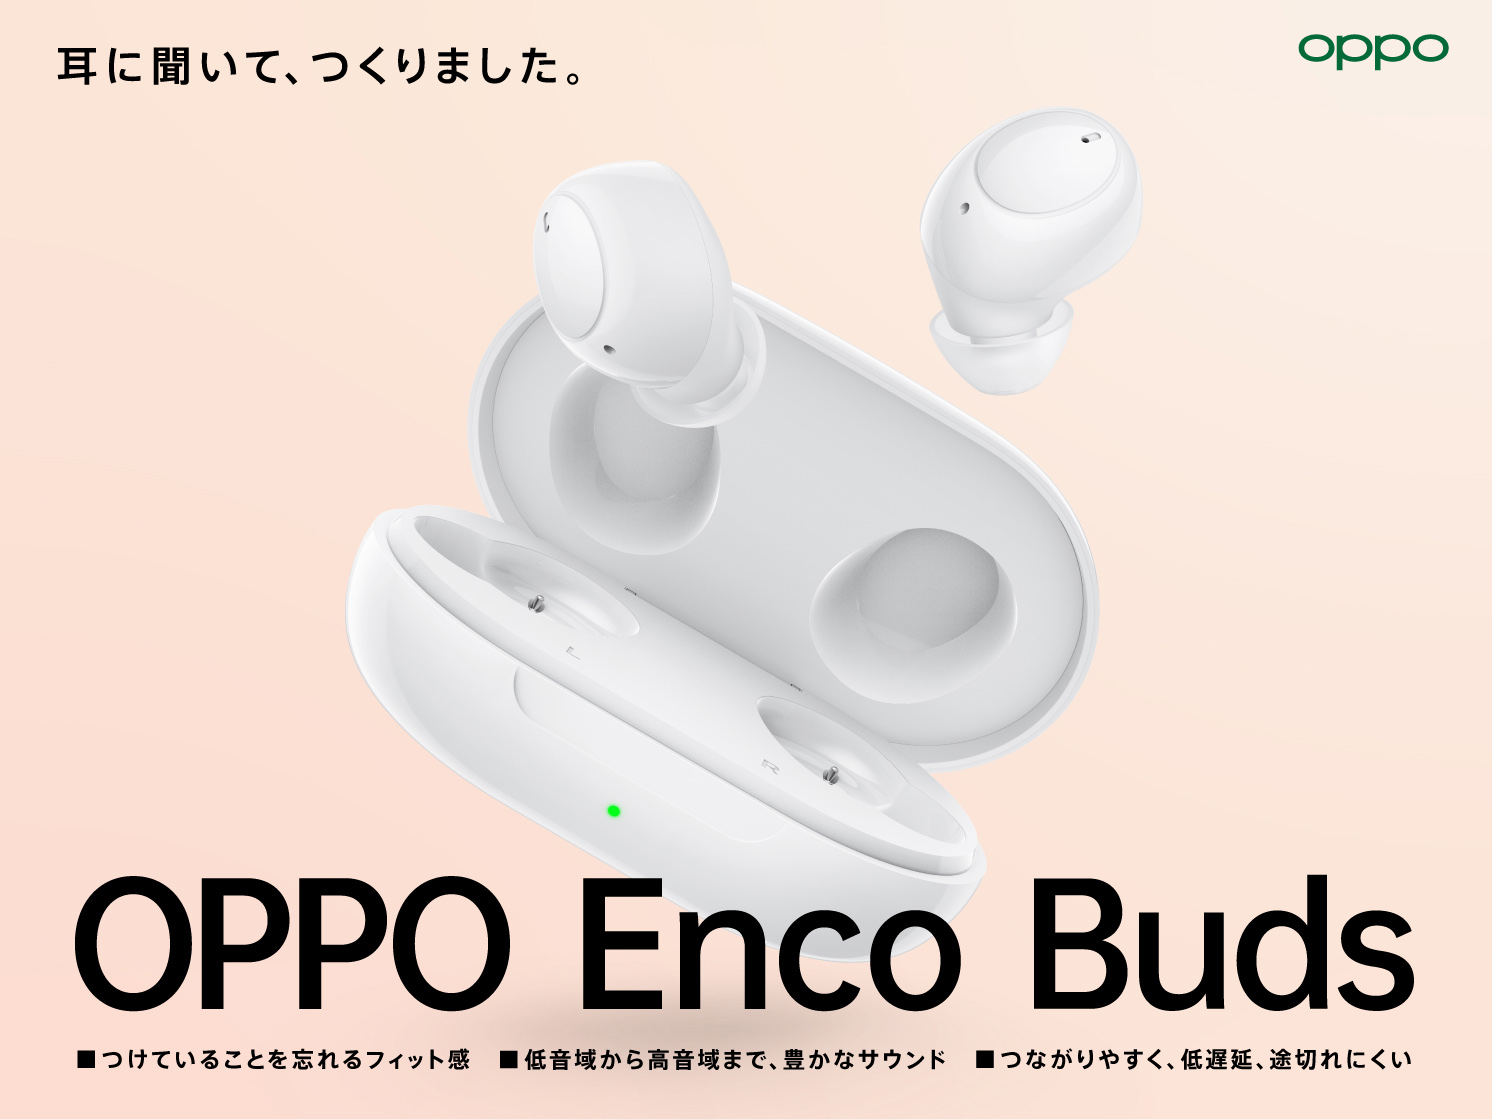 OPPO、完全ワイヤレスイヤホン「OPPO Enco Buds」が8月27日より発売